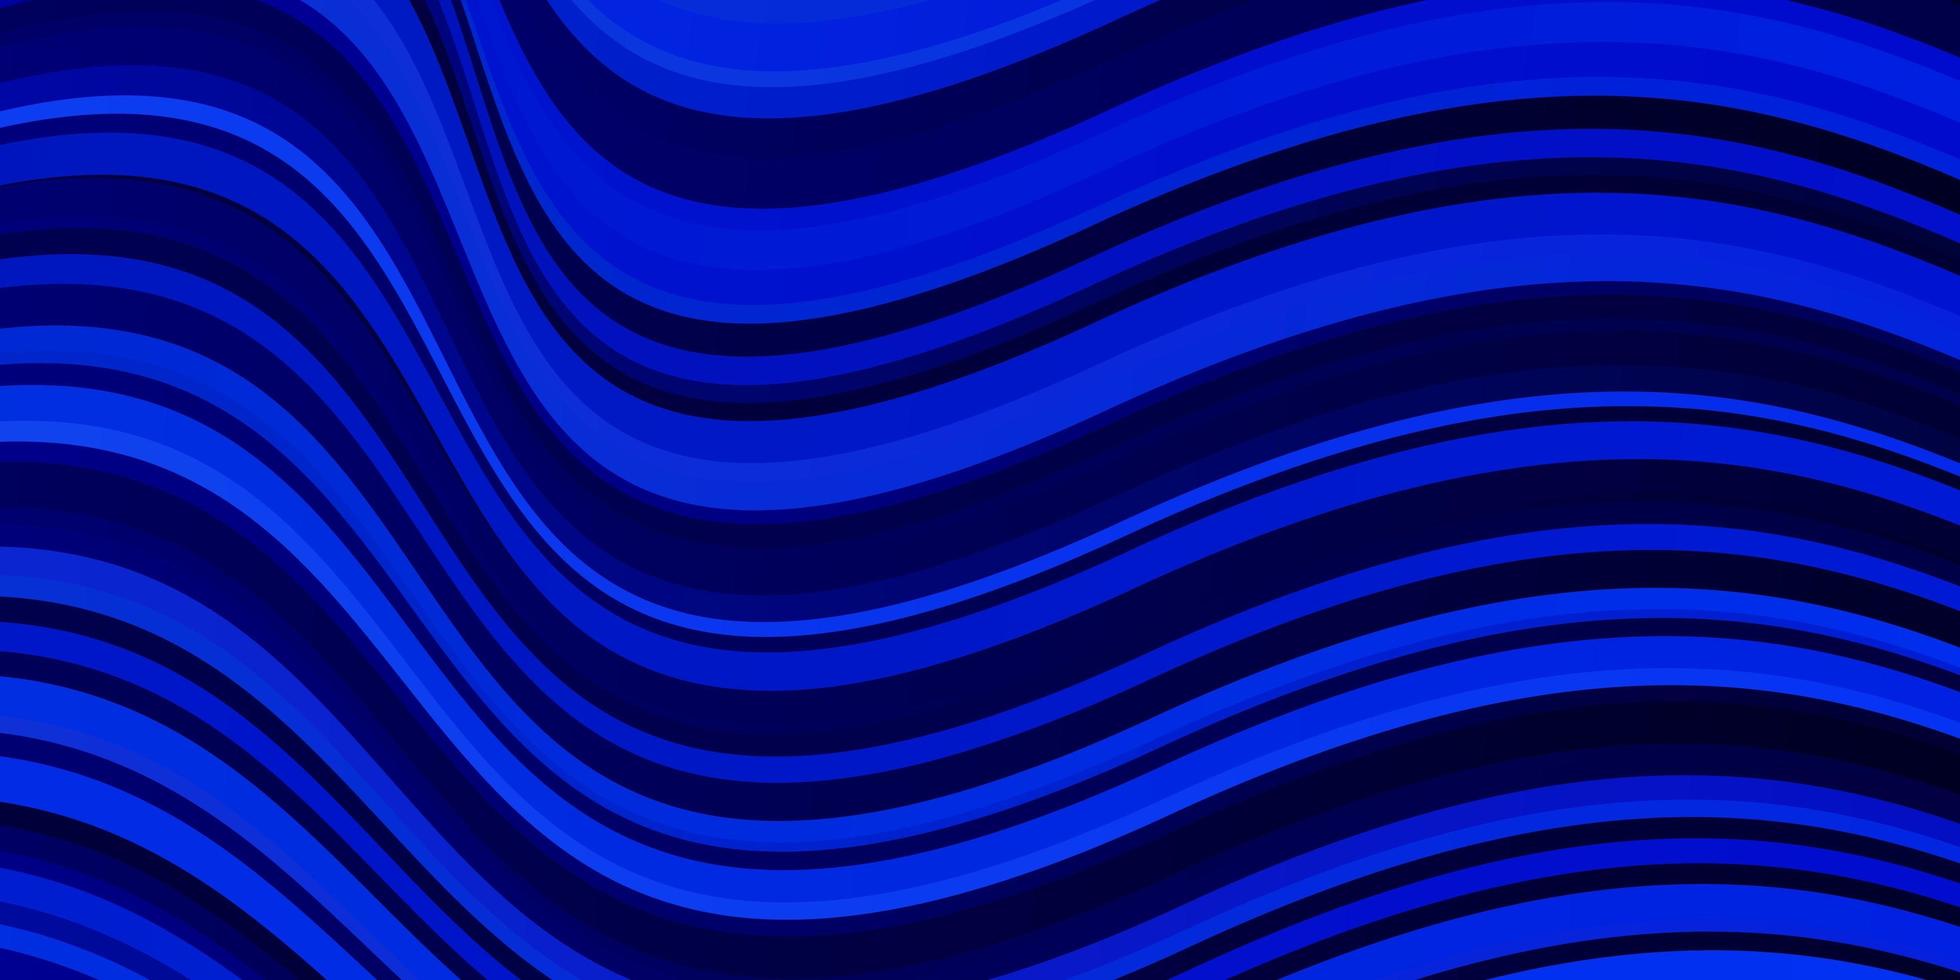 Fondo de vector azul oscuro con curvas. Ilustración abstracta con arcos degradados. patrón para sitios web, páginas de destino.